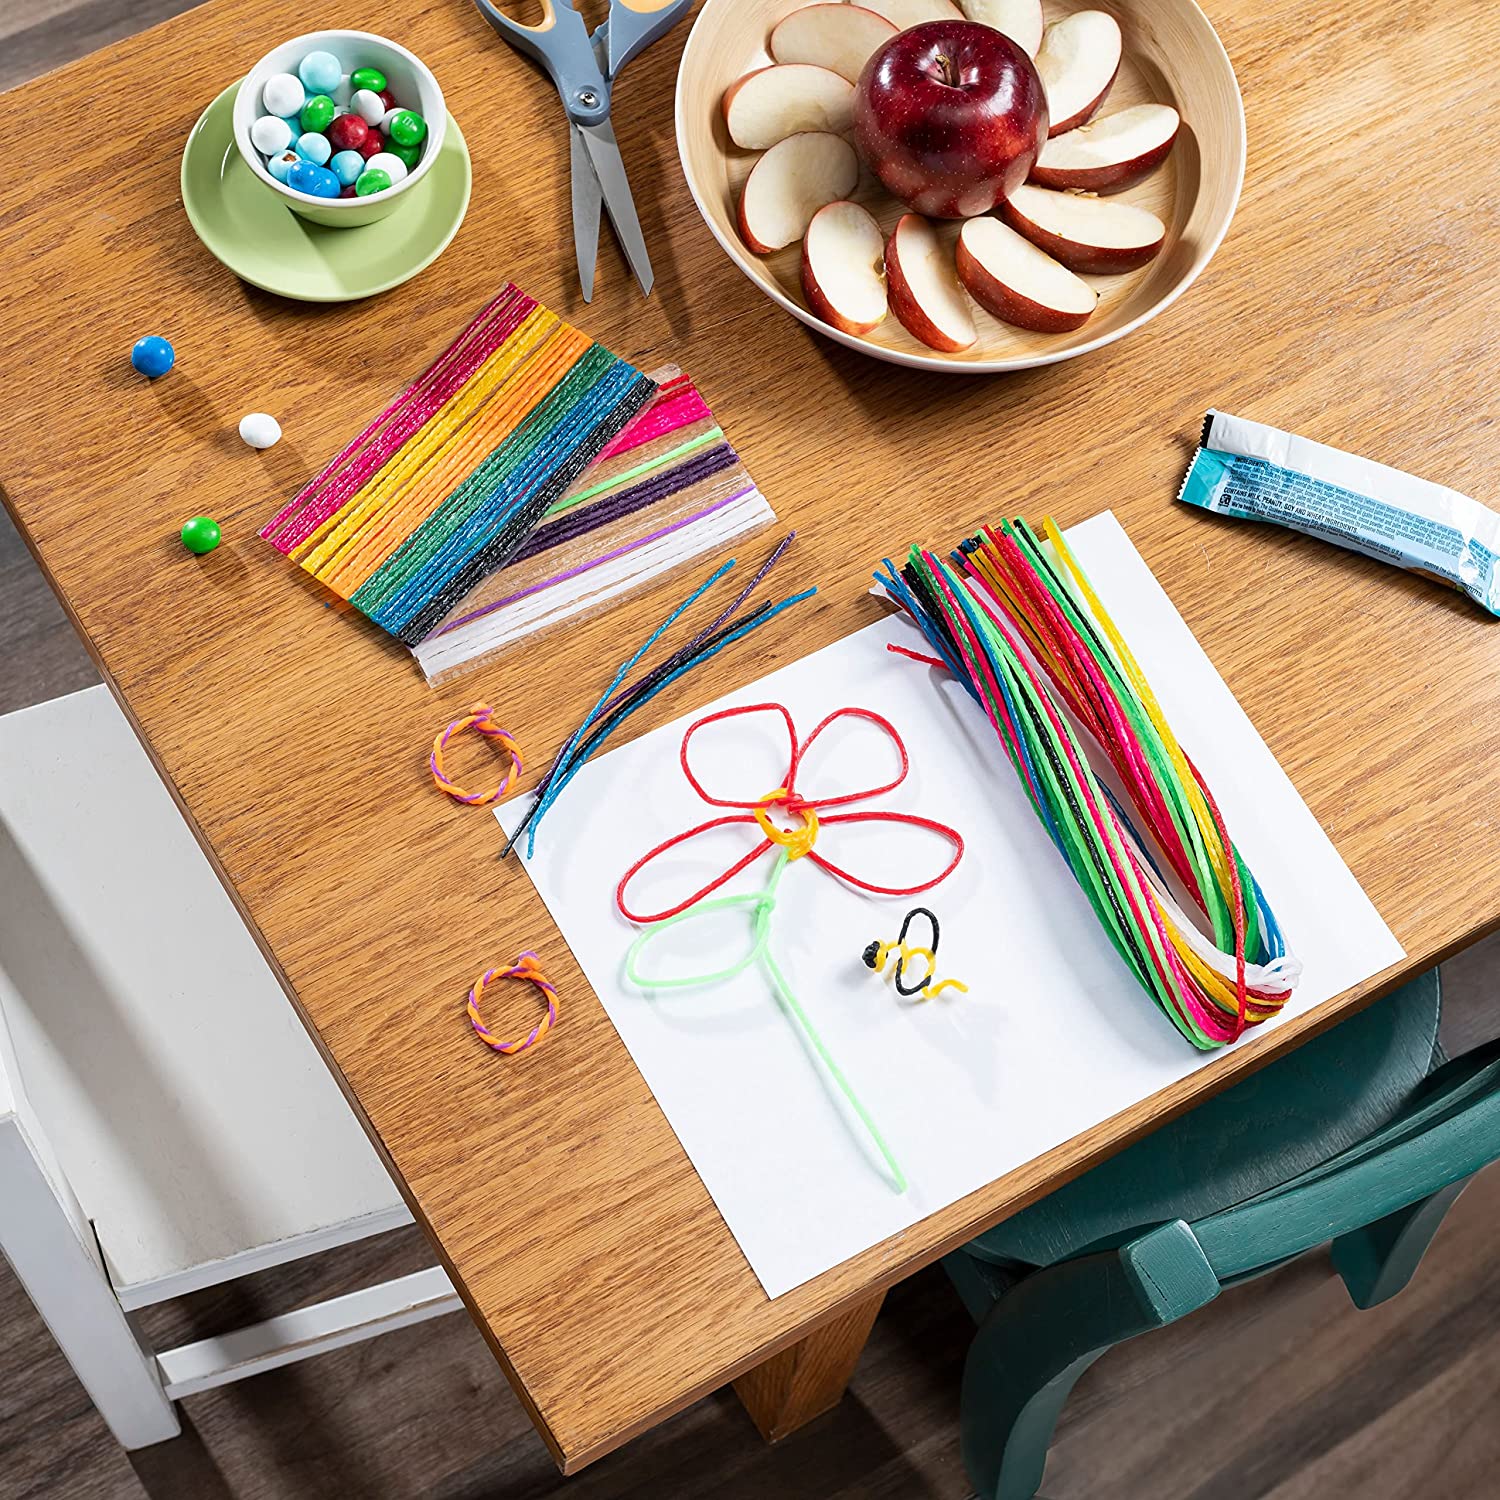 Stringamajigs Art Wax Craft Yarn Sticks for Kids - NEON - Retail Packa –  203 Brands